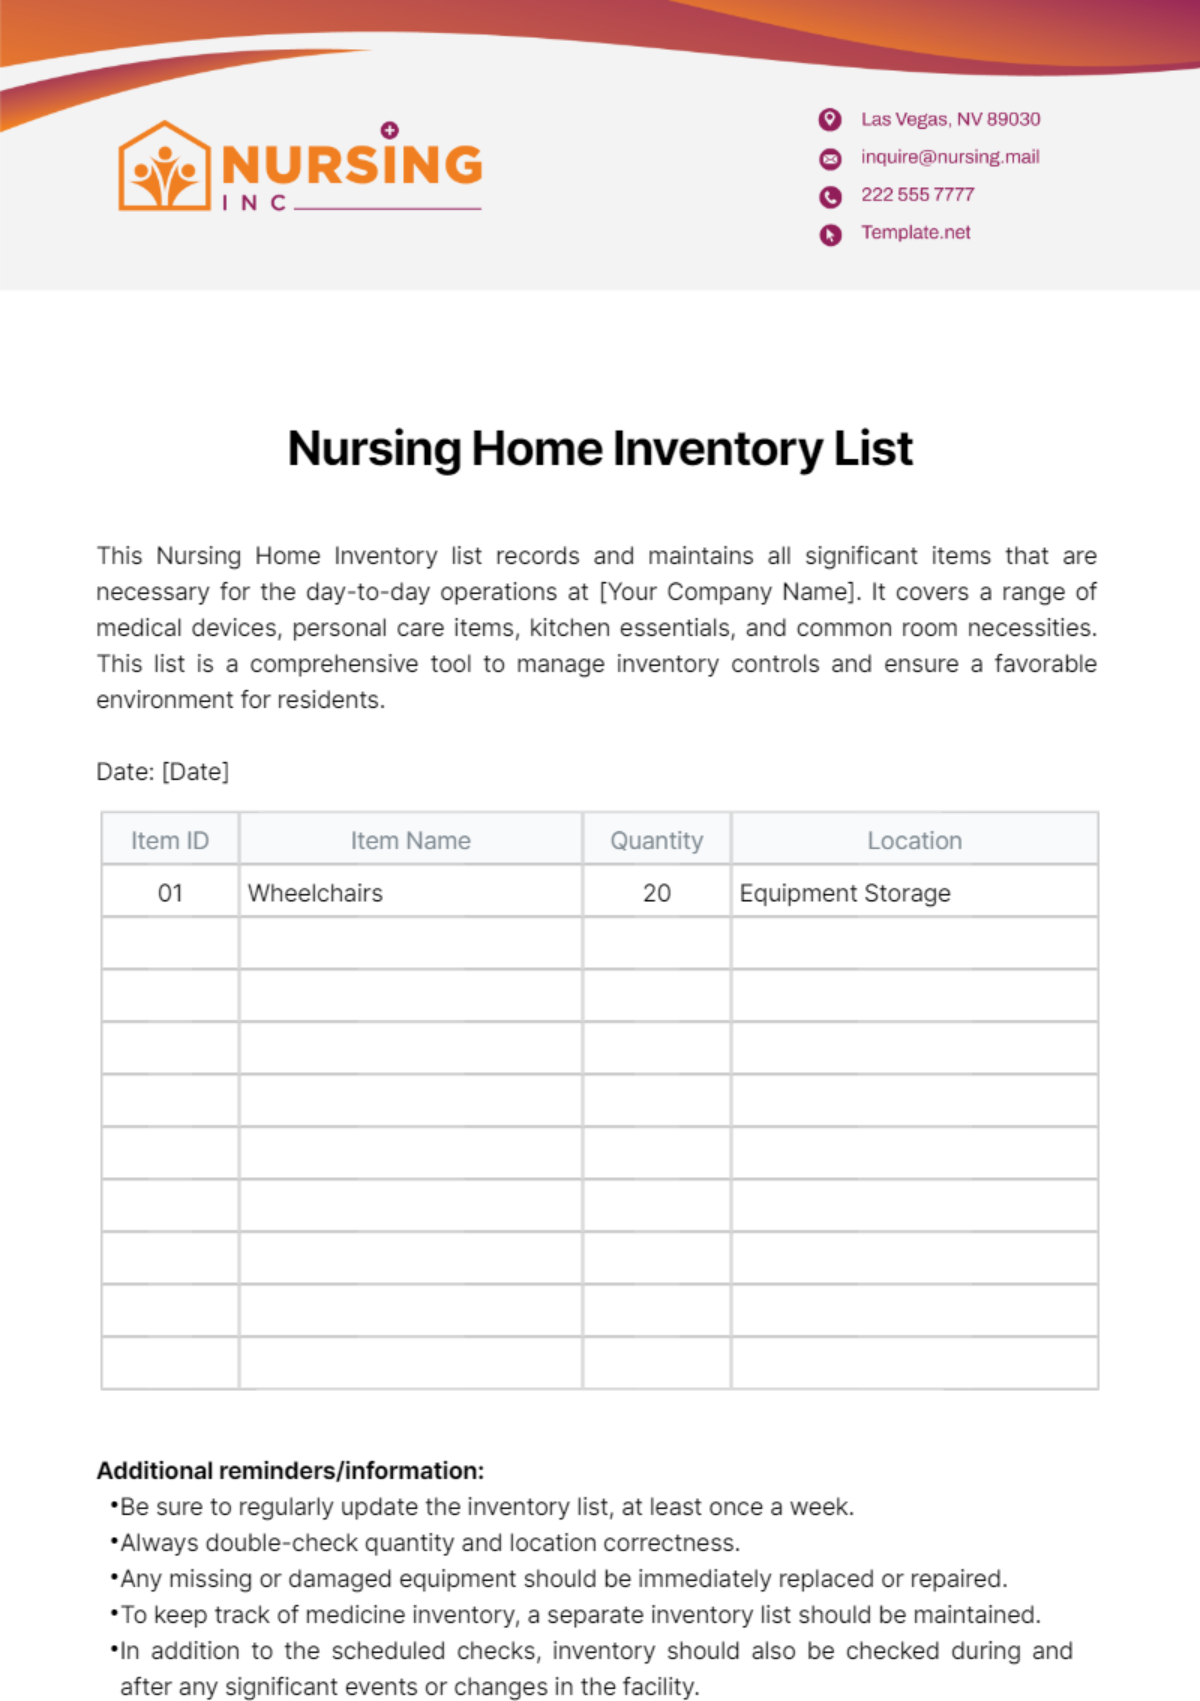 Nursing Home Inventory List Template